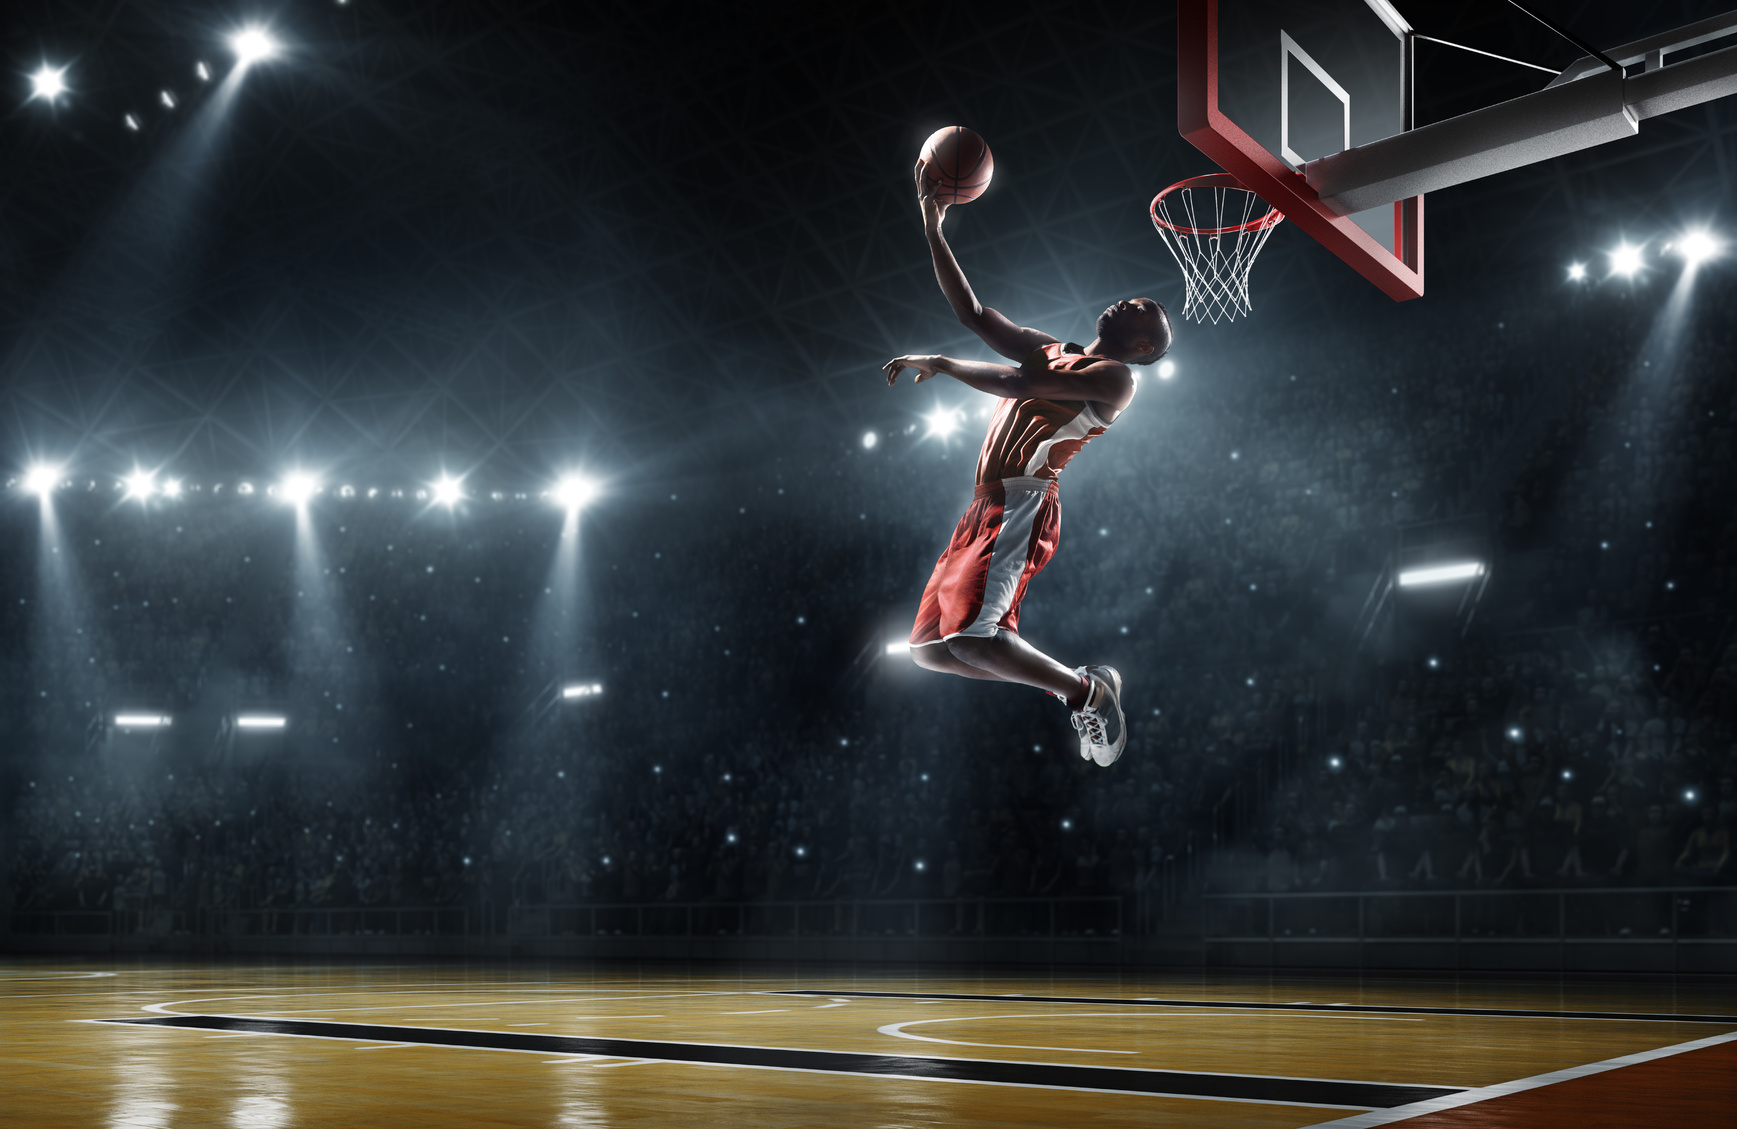 Basketball player makes slam dunk